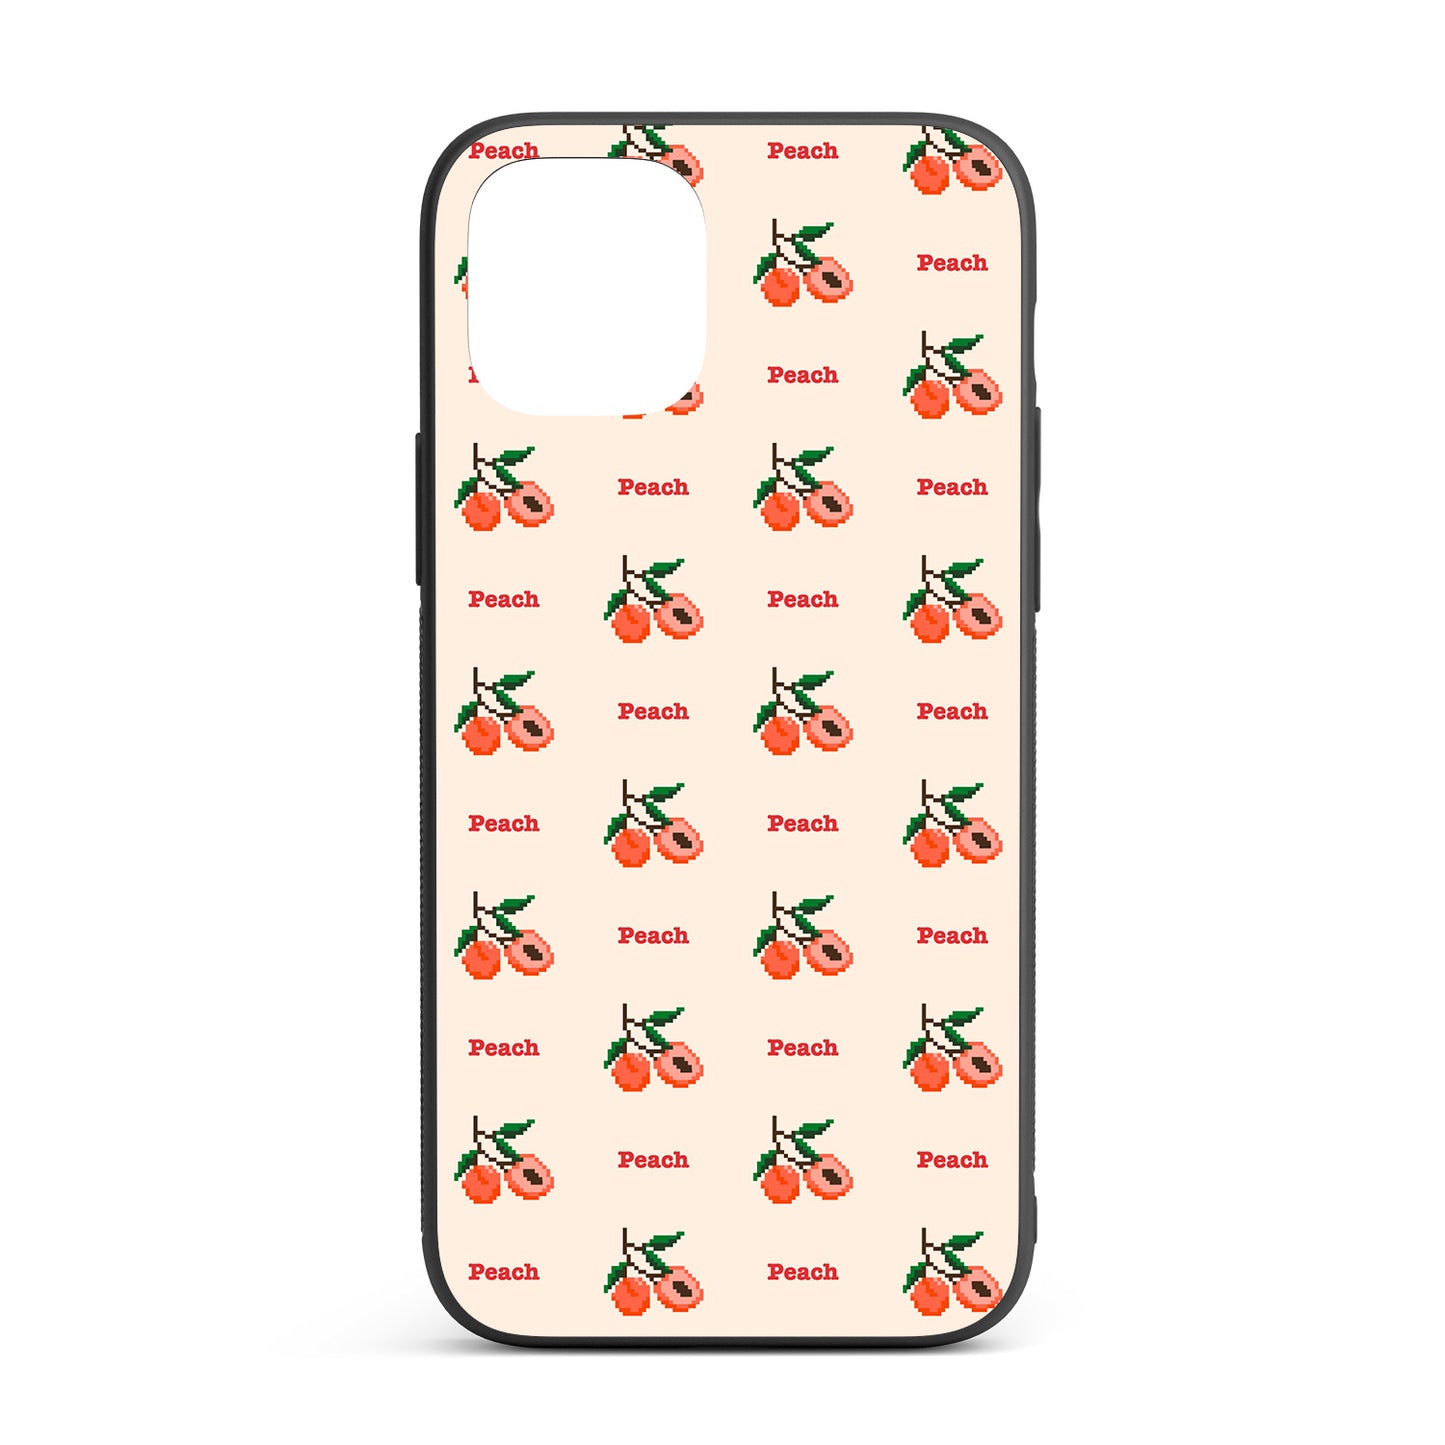 Pixelated Peach iPhone glass case